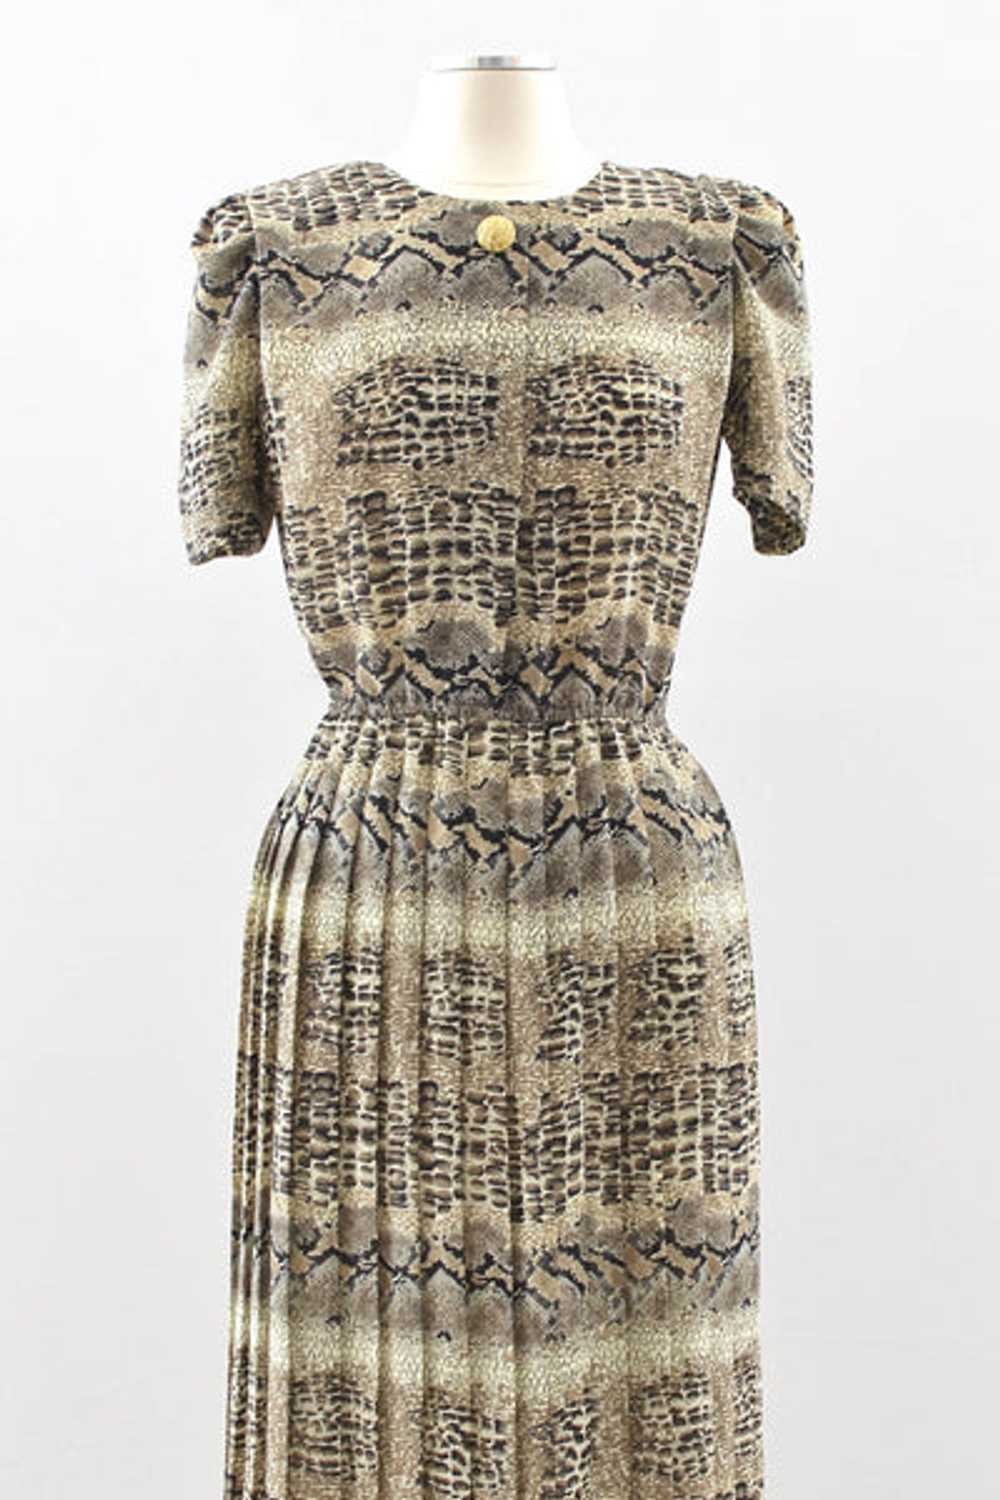 Snake Print Dress - image 2